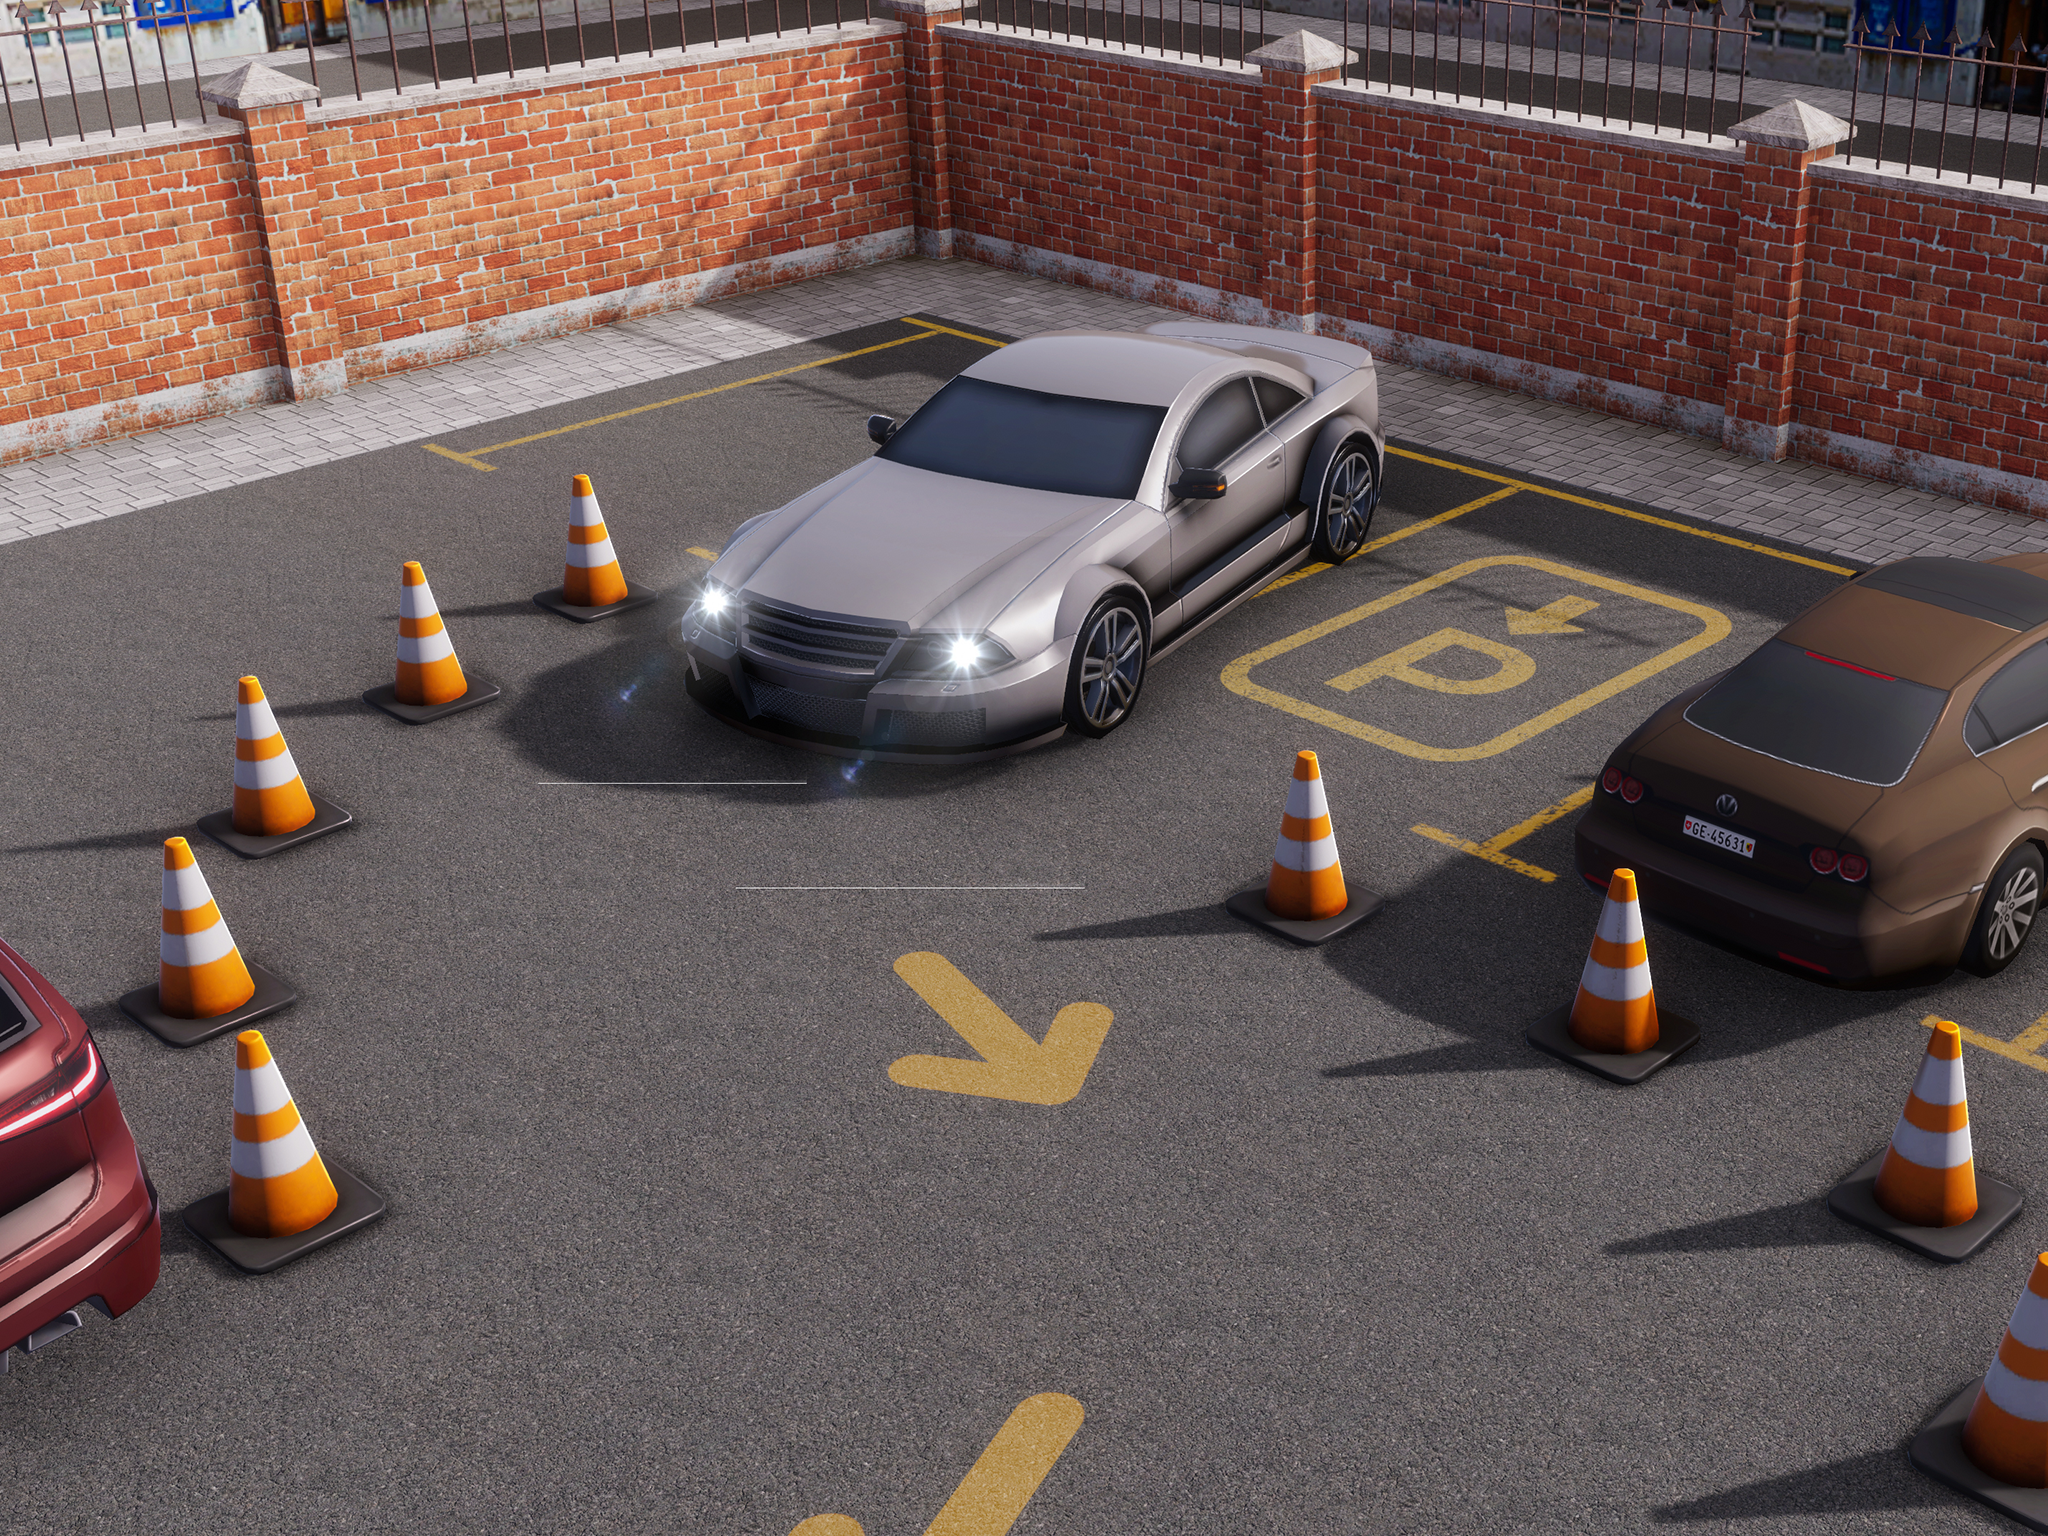 Multi-storey Car Parking 3D APK para Android - Download